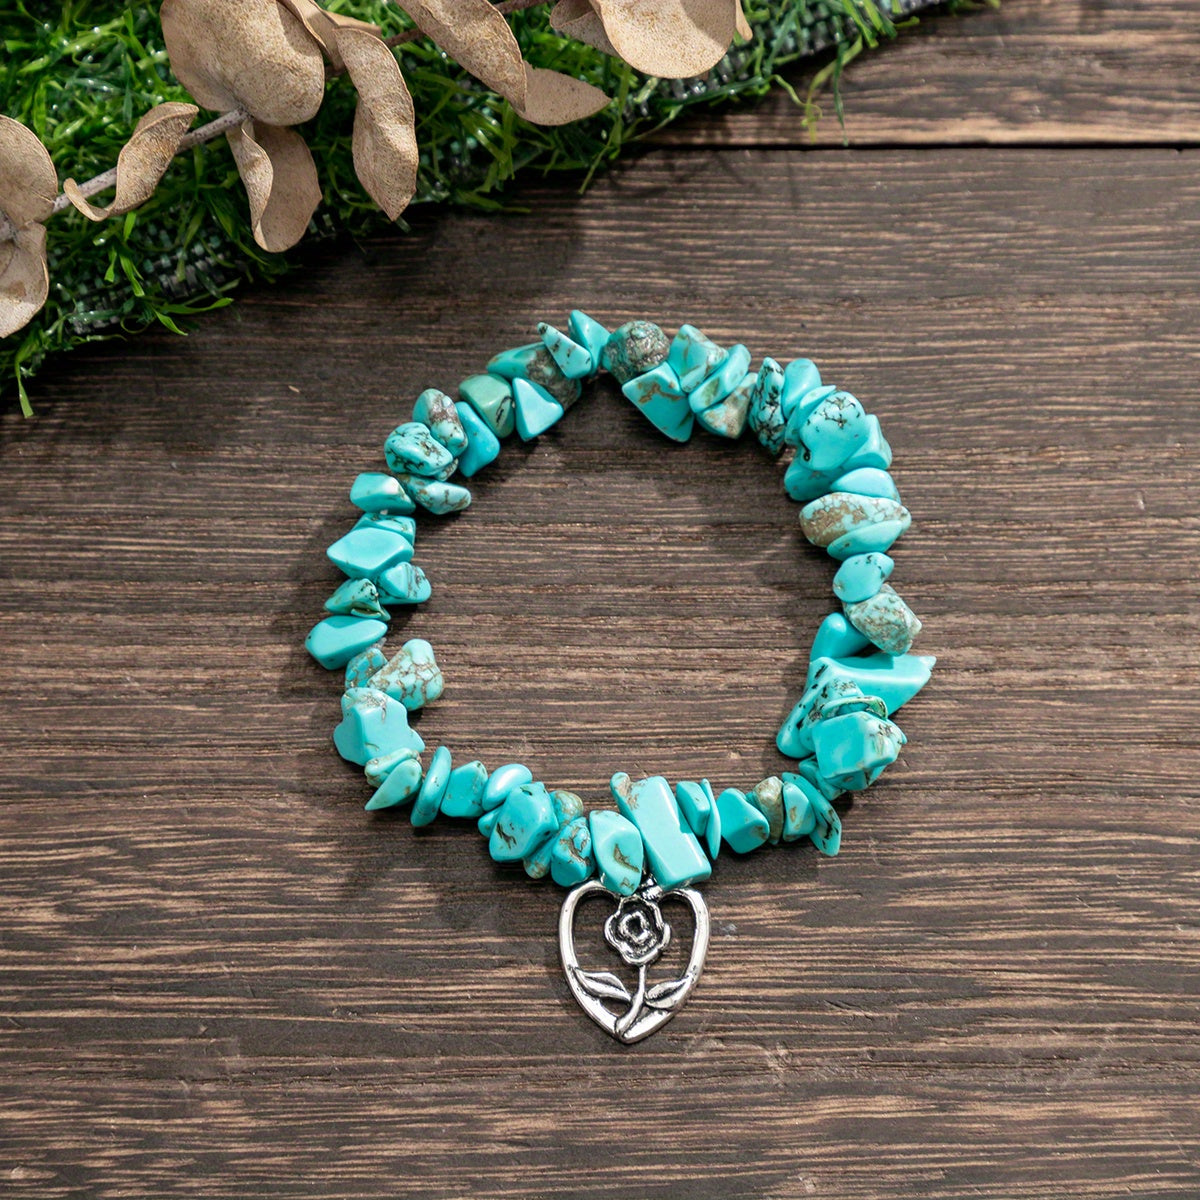 Vibrant Turquoise Beaded Bracelet - A Unique Ethnic Style Accessory